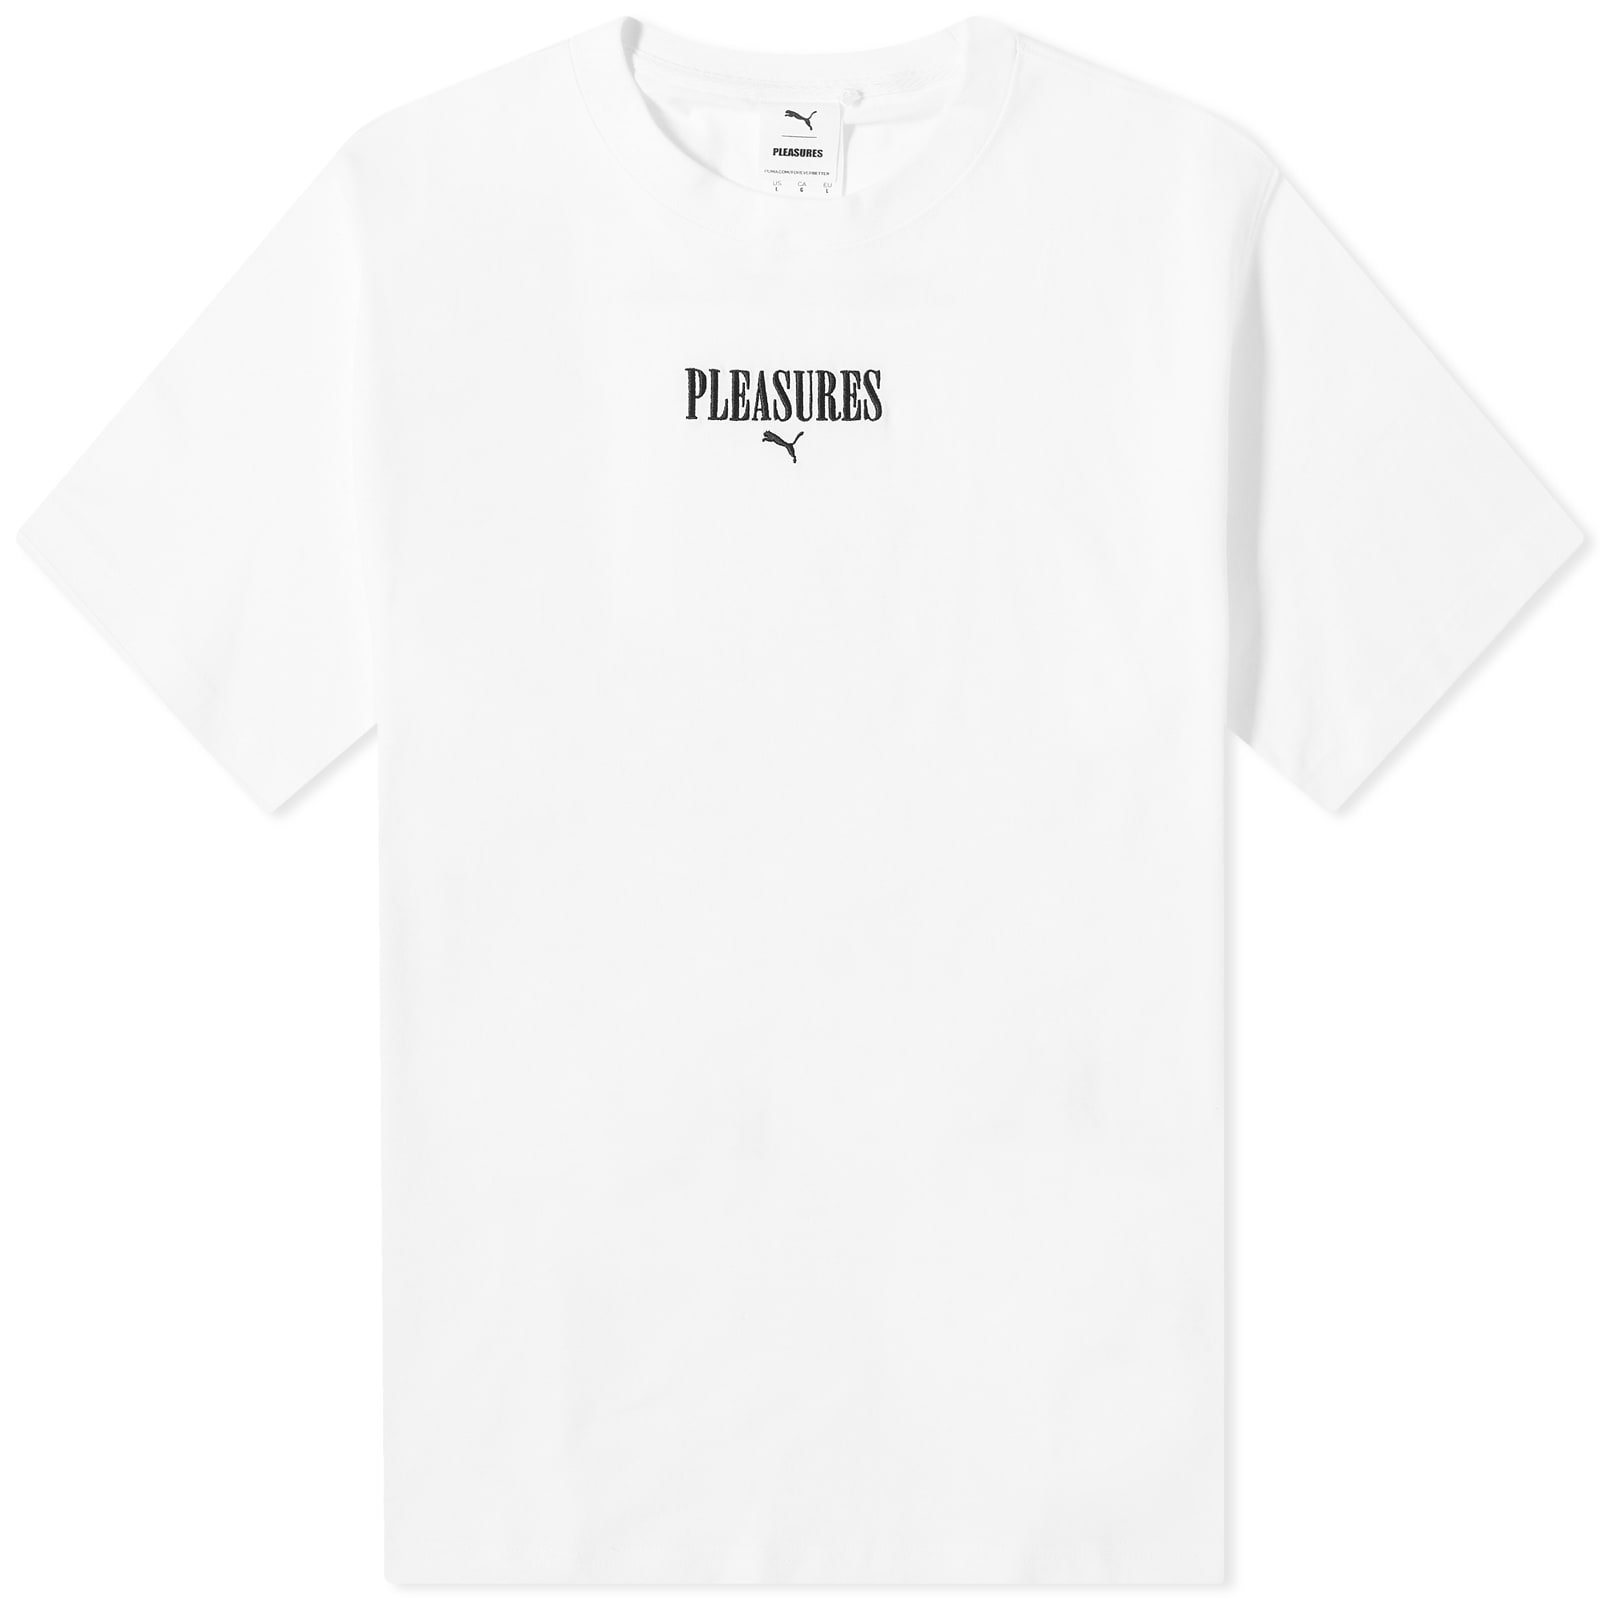 Men's x PLEASURES Graphic T-Shirt Men's White